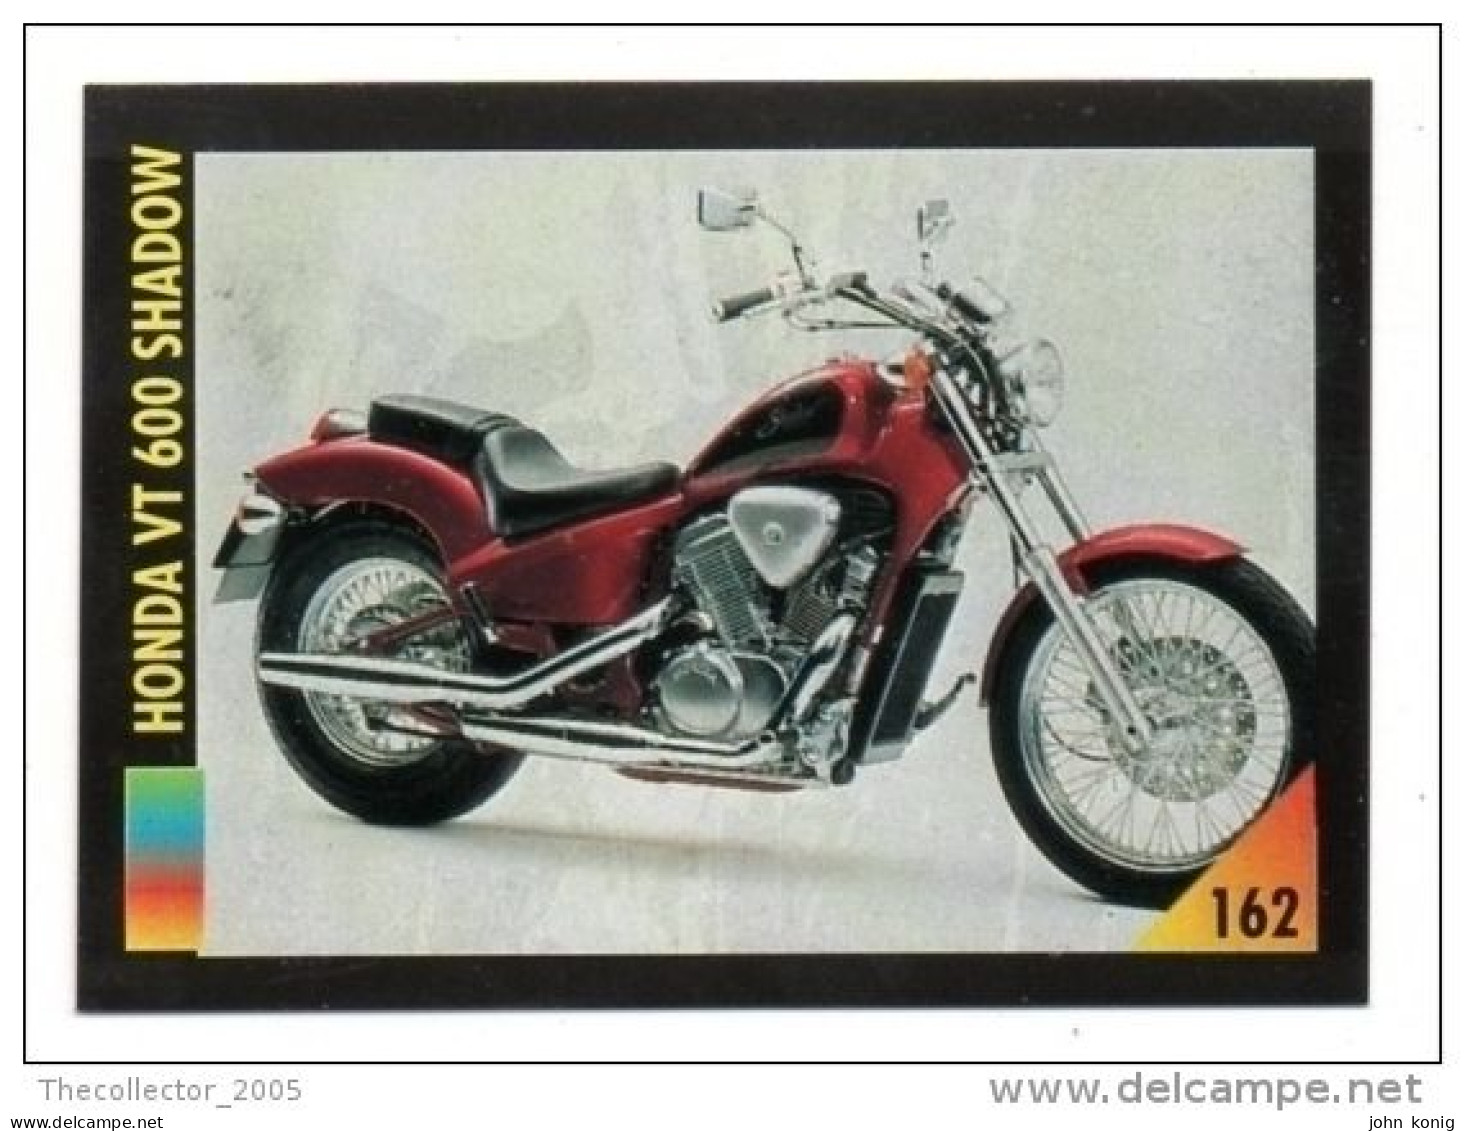 FIGURINA TRADING CARDS - LA MIA MOTO - MY MOTORBIKE - MASTERS EDIZIONI (1993) - HONDA VT 600 SHADOW - Auto & Verkehr